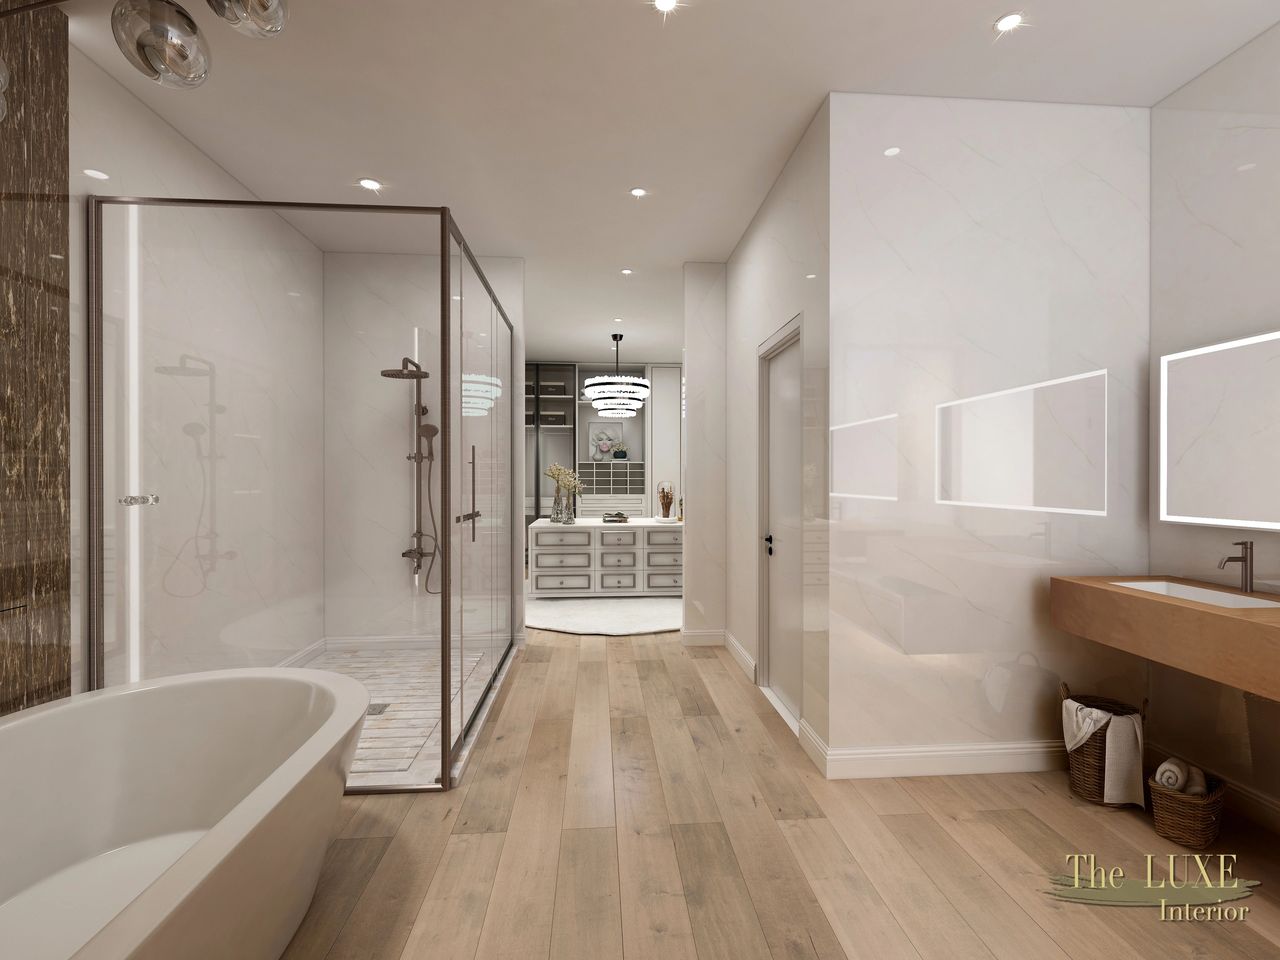 The fusion of 21st Century Walk-In Closet and Bath Design